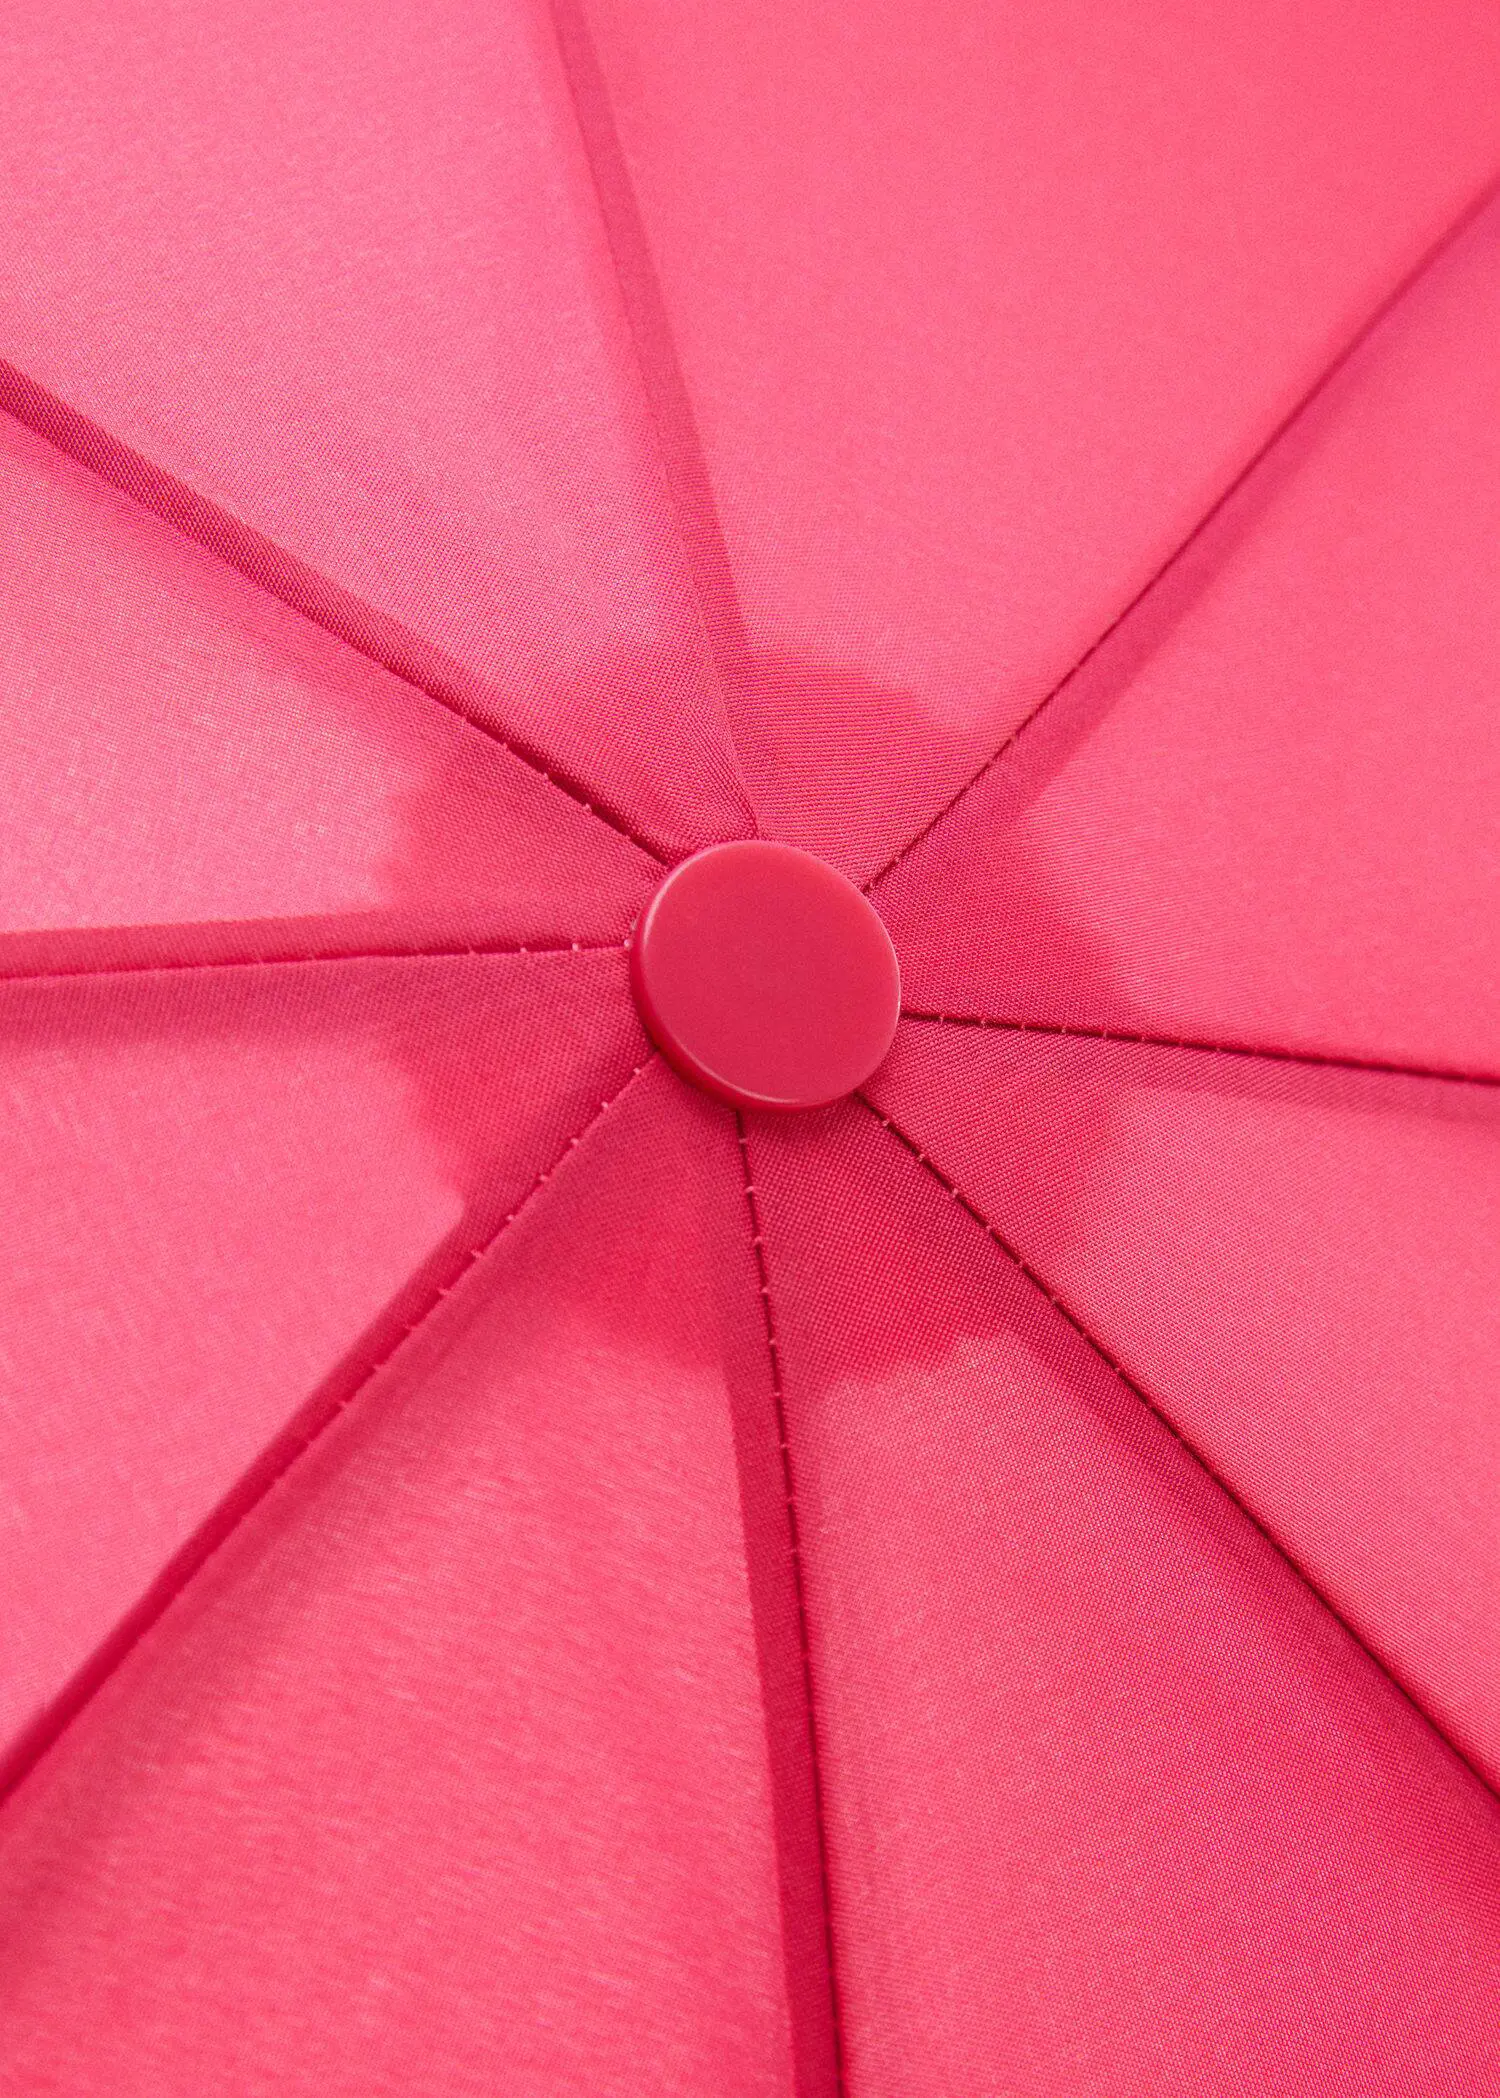 Mango Plain folding umbrella. a close-up view of the inside of an open umbrella. 